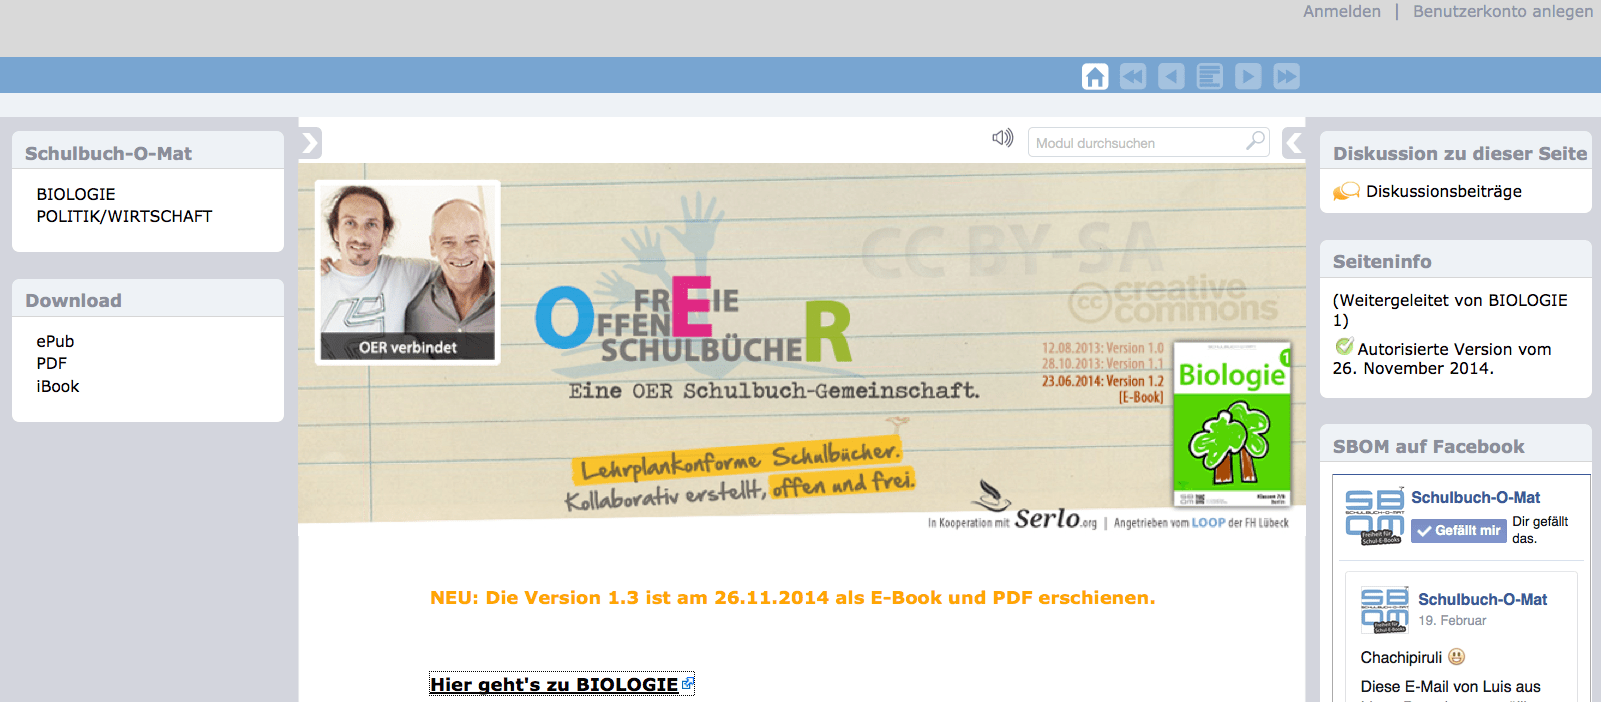 Screenshot von schulbuch-o-mat.oncampus.de (nicht unter freier Lizenz)